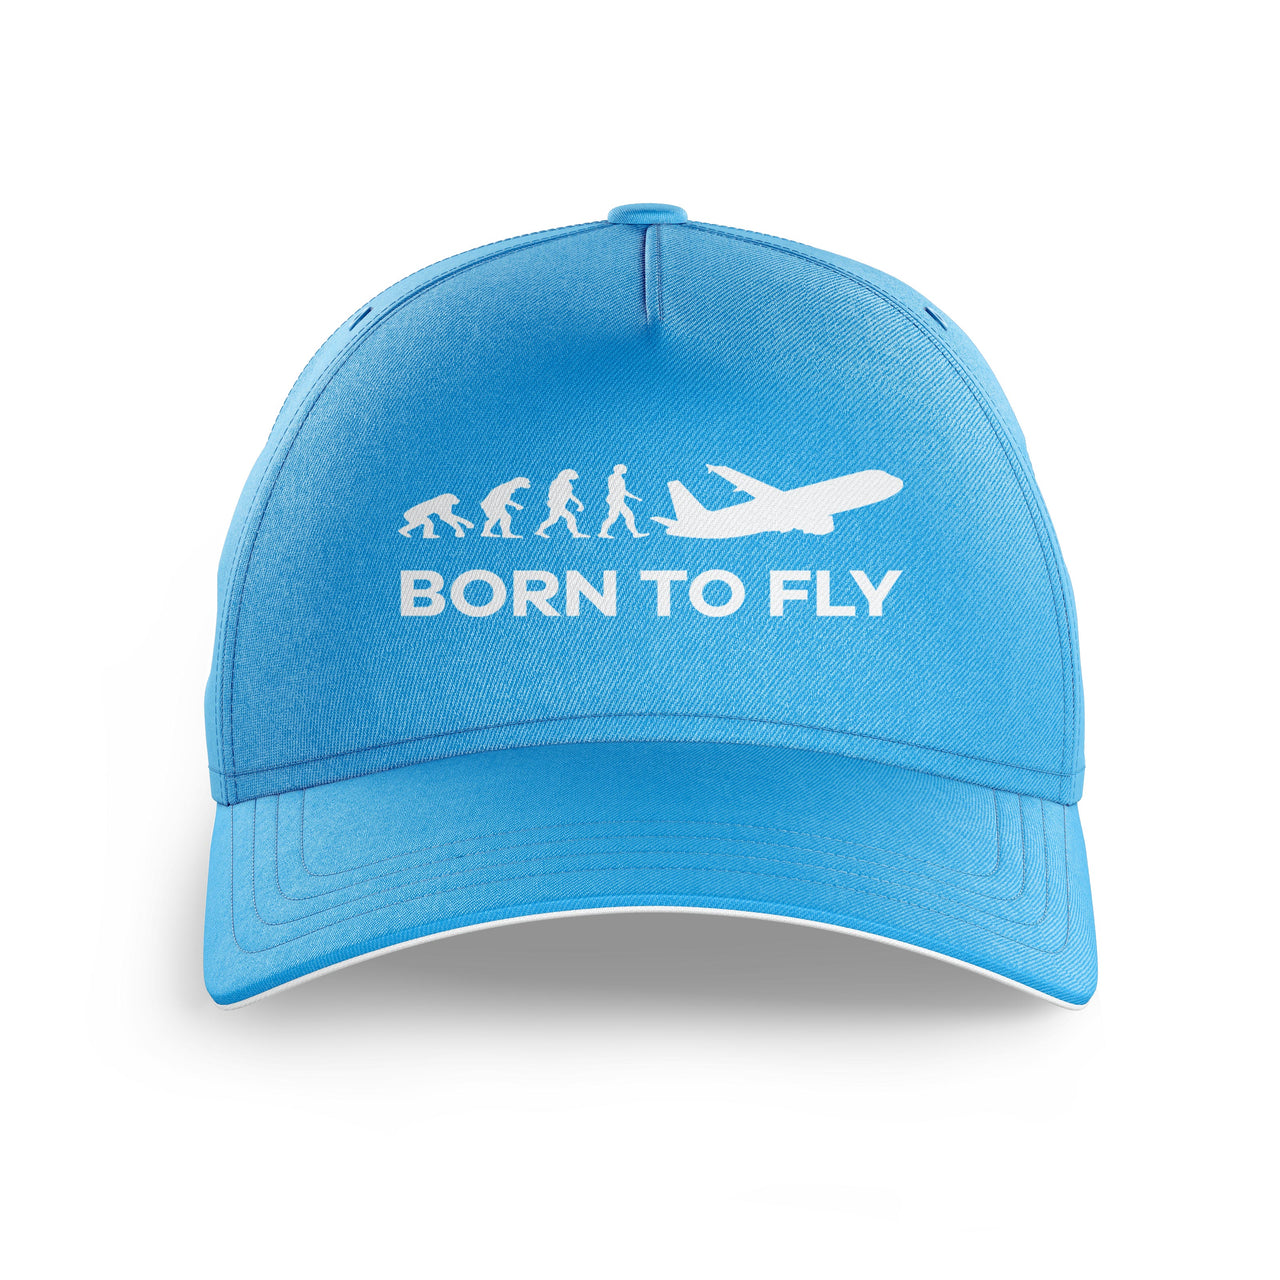 Born To Fly Aircraft Printed Hats